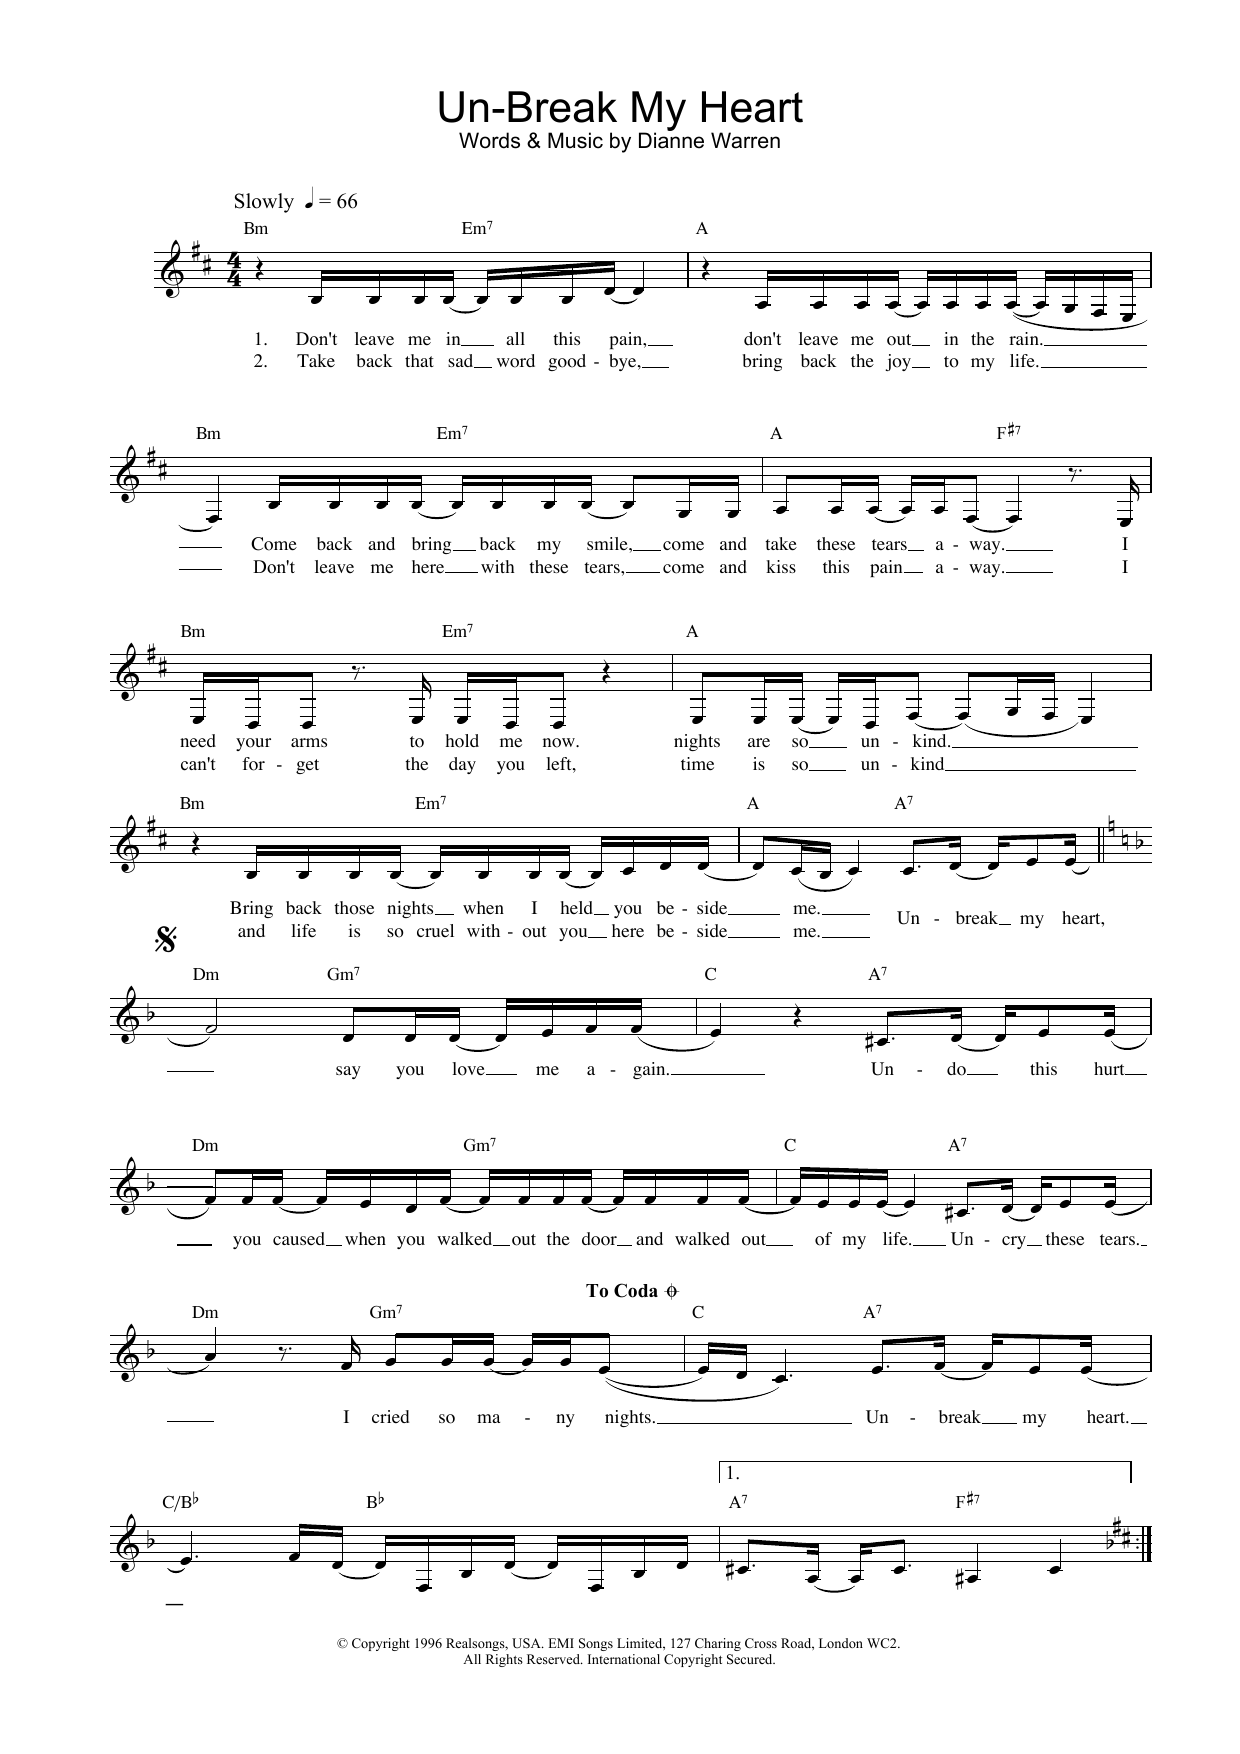 Download Diane Warren Un-break My Heart Sheet Music and learn how to play Voice PDF digital score in minutes